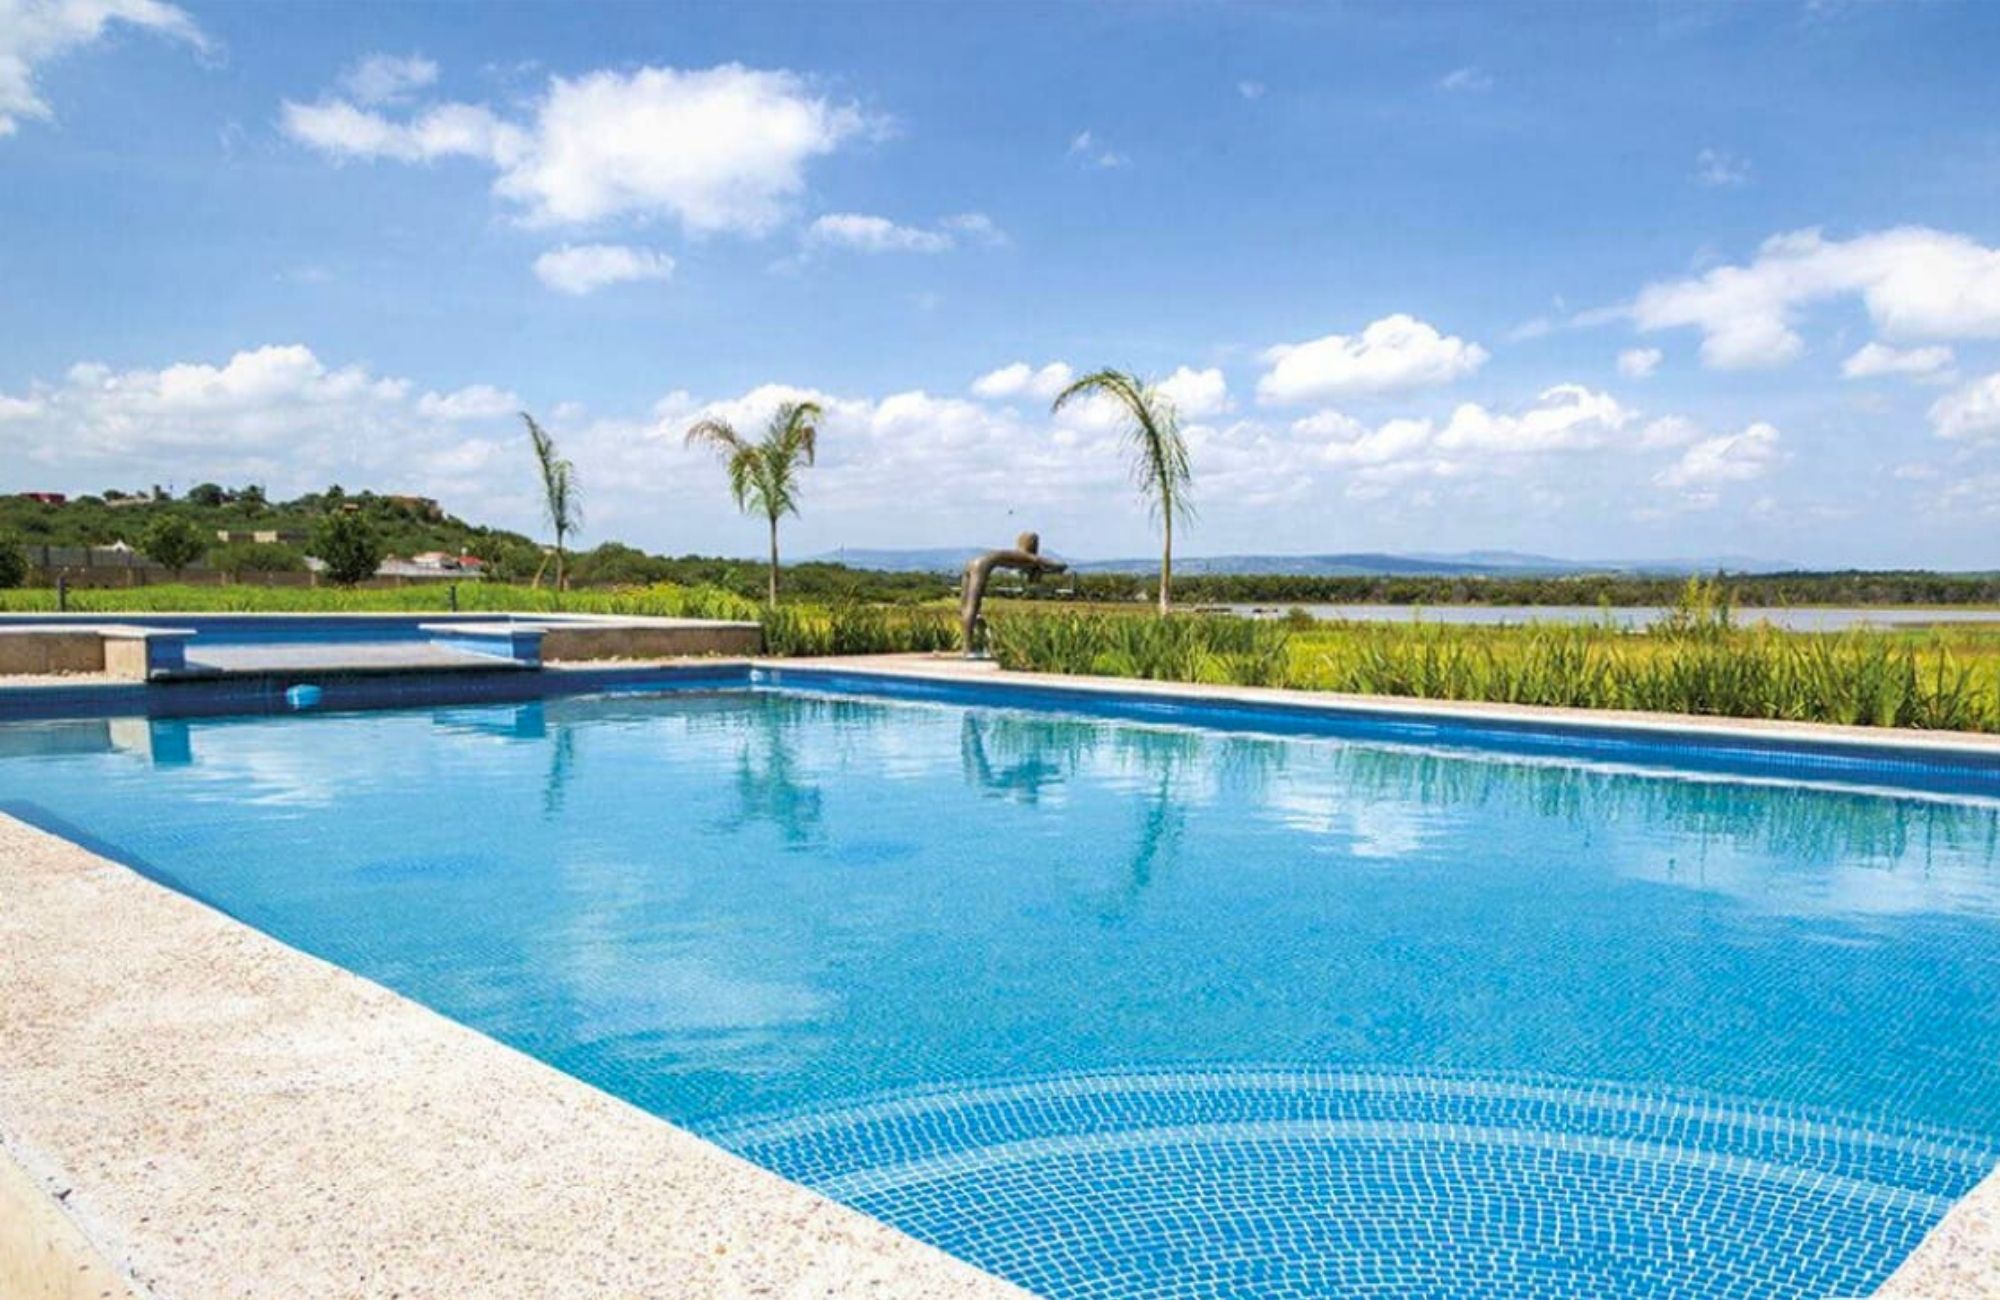 879 m2 lot in luxury community with amenities, for sale San Miguel de Allende.